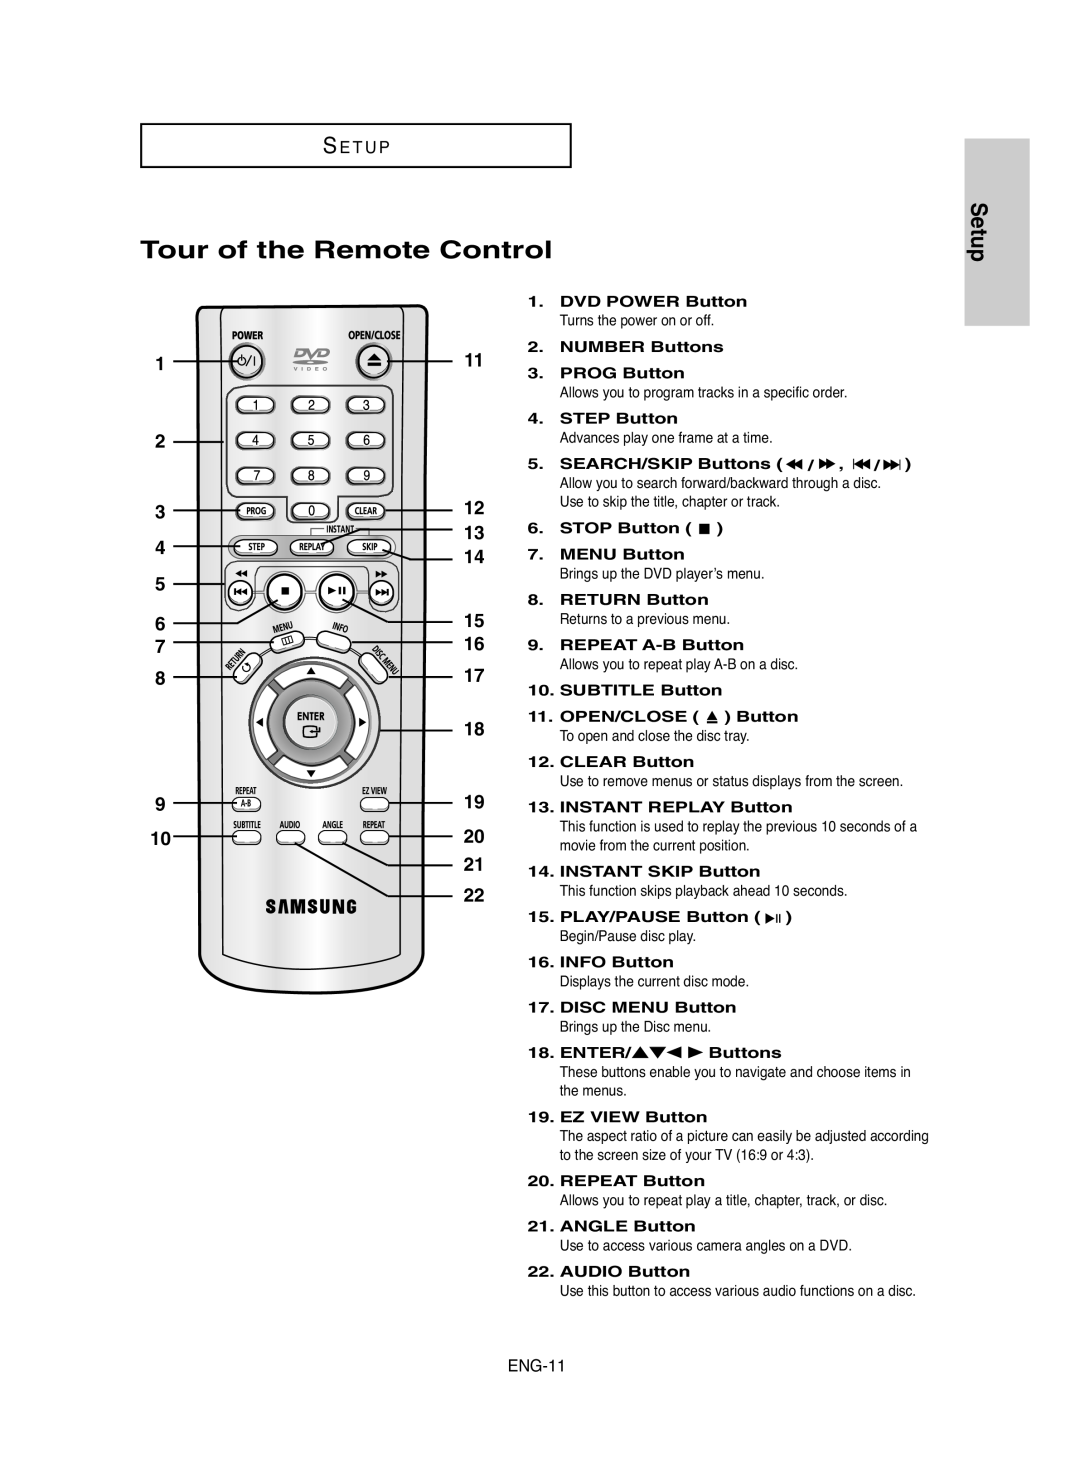 Samsung DVD-HD755 manual Tour of the Remote Control, Setup, S E T U P, ENG-11 